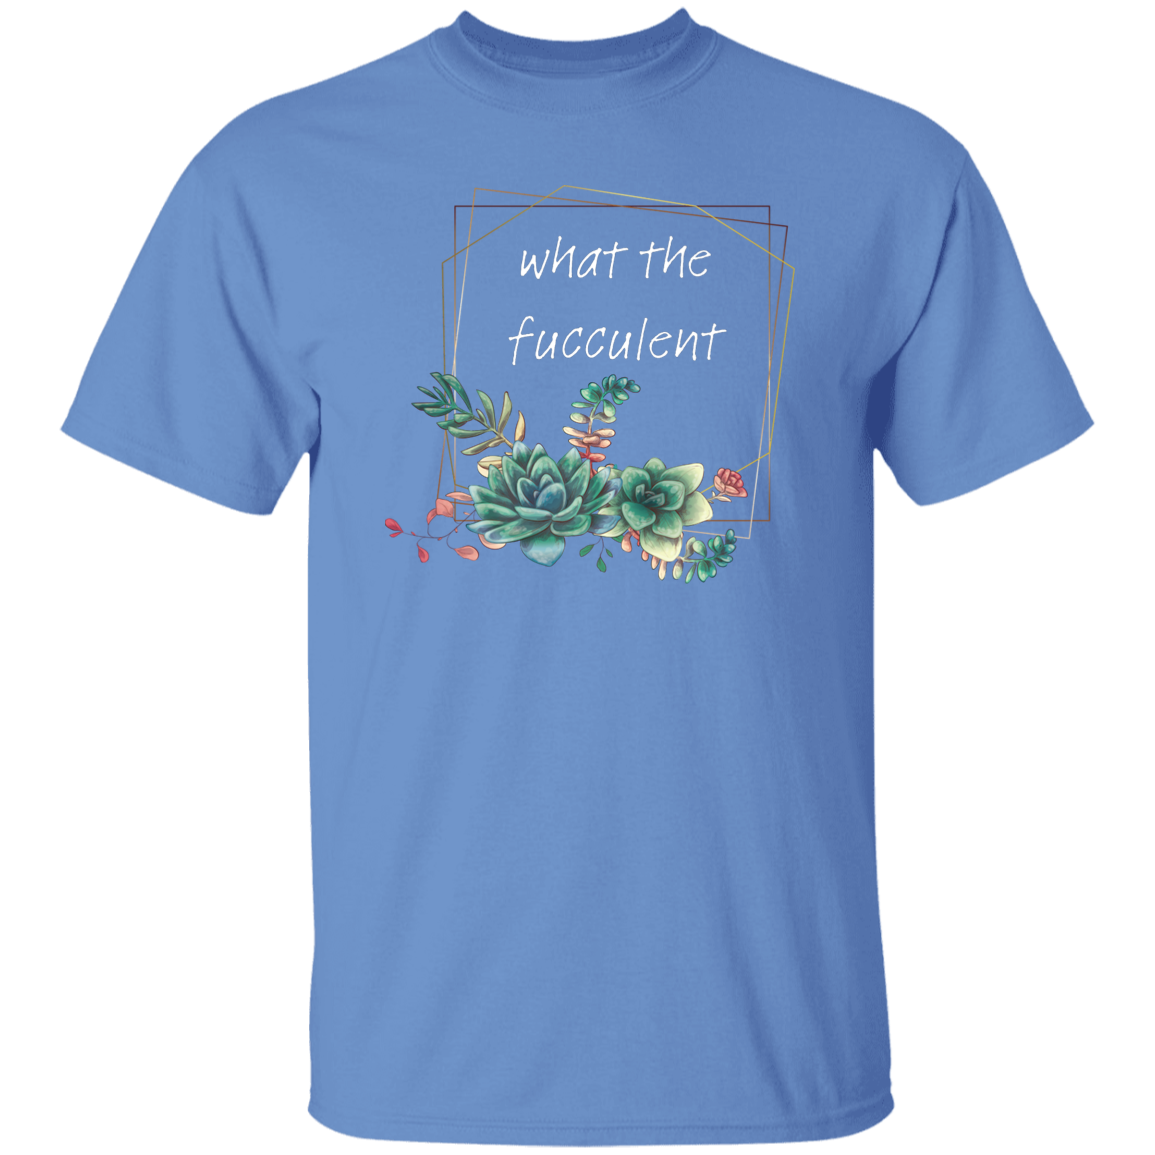 Fucculent Square T-Shirt